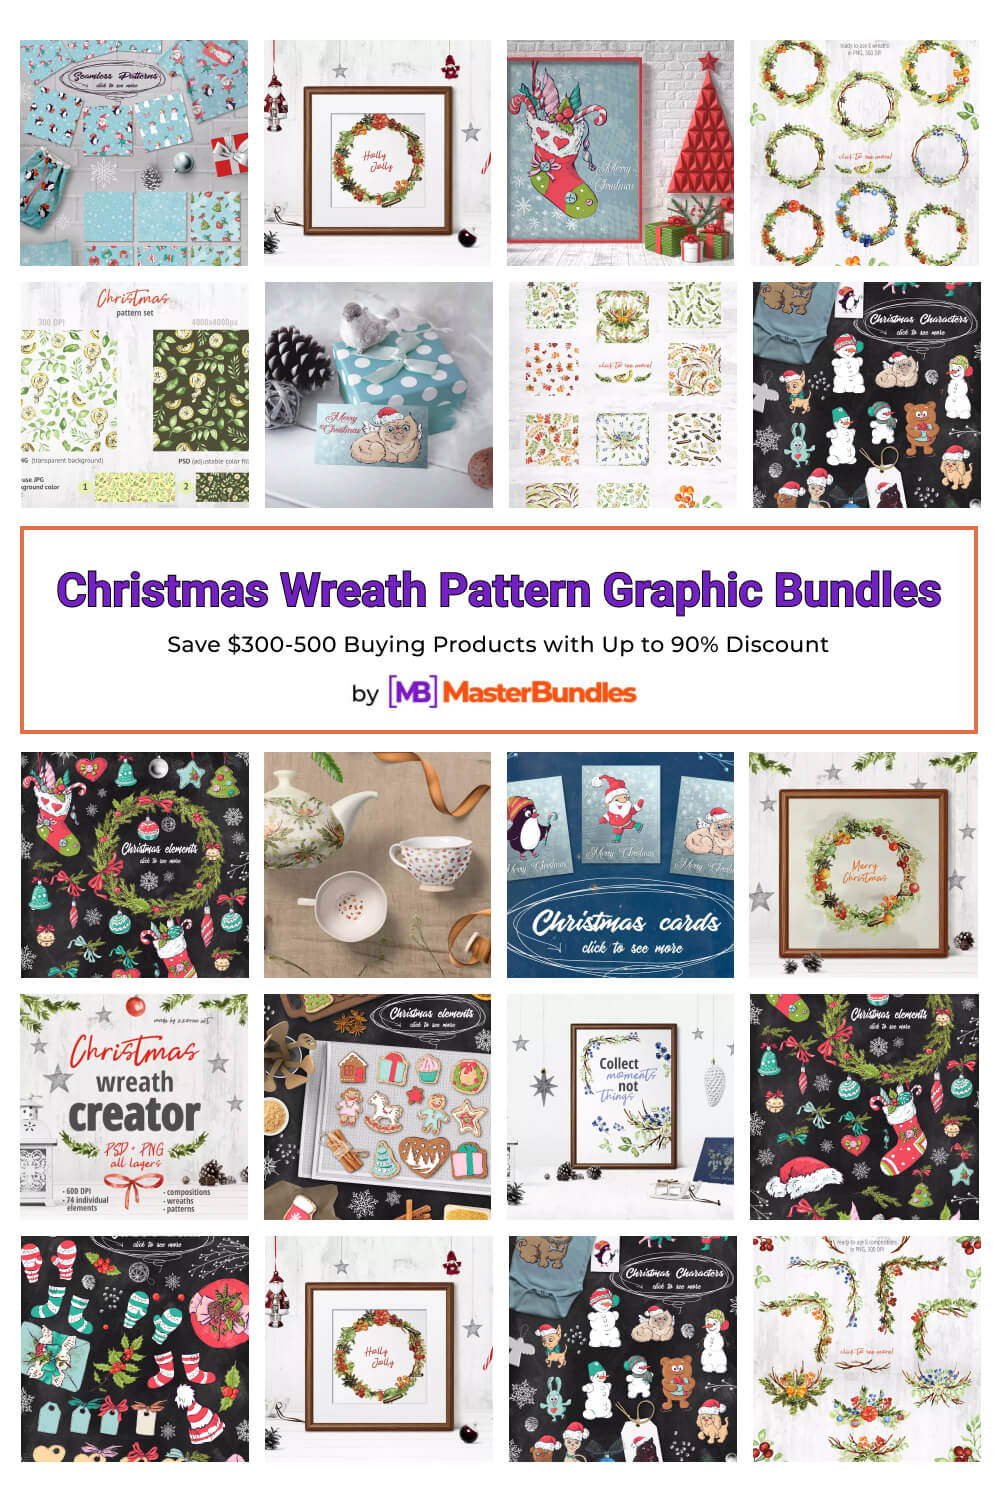 christmas wreath pattern graphic bundles pinterest image.